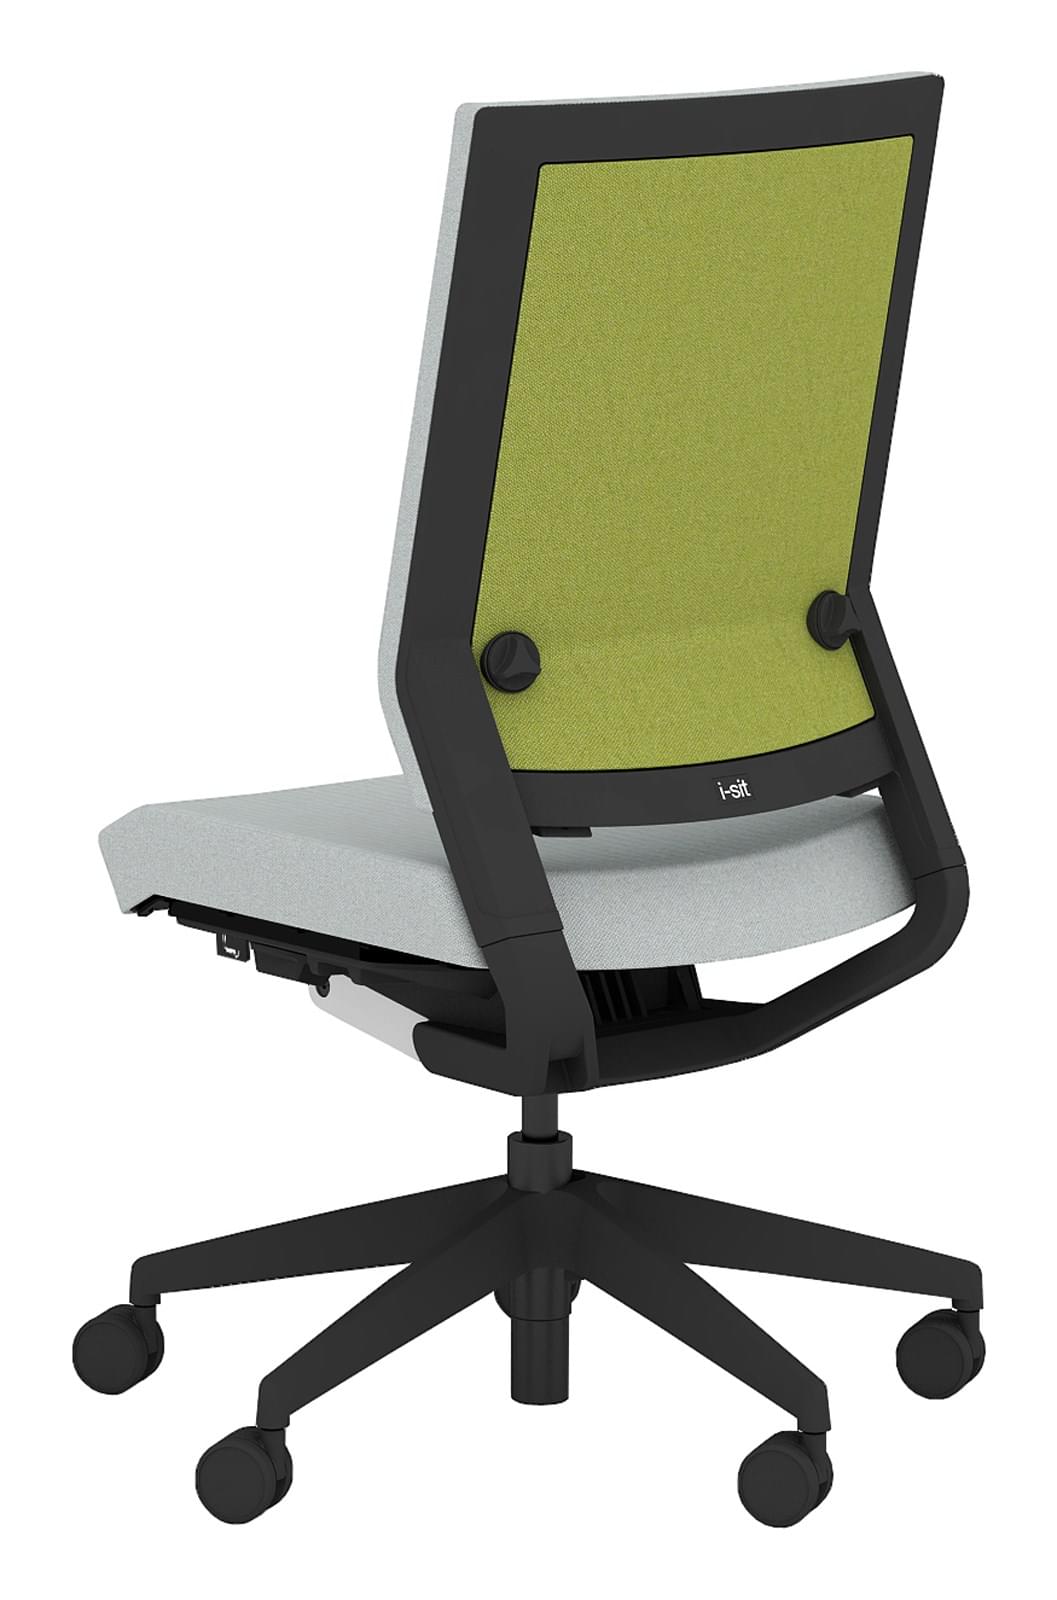 ergomic structure of fib office chair